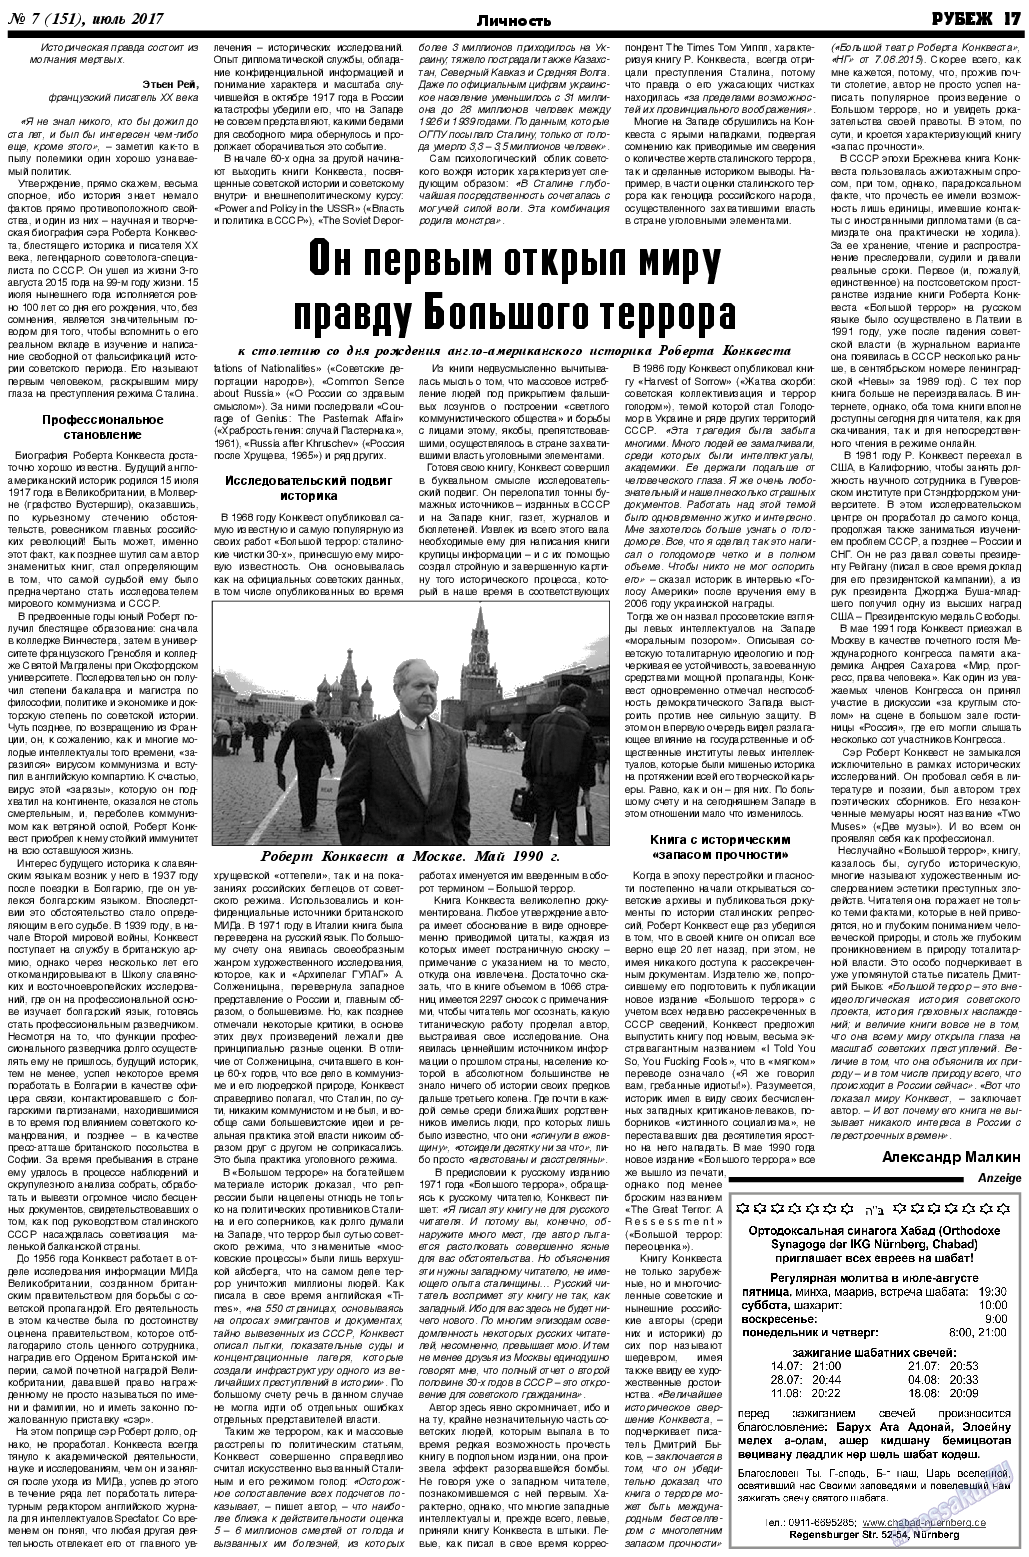 Рубеж, газета. 2017 №7 стр.17